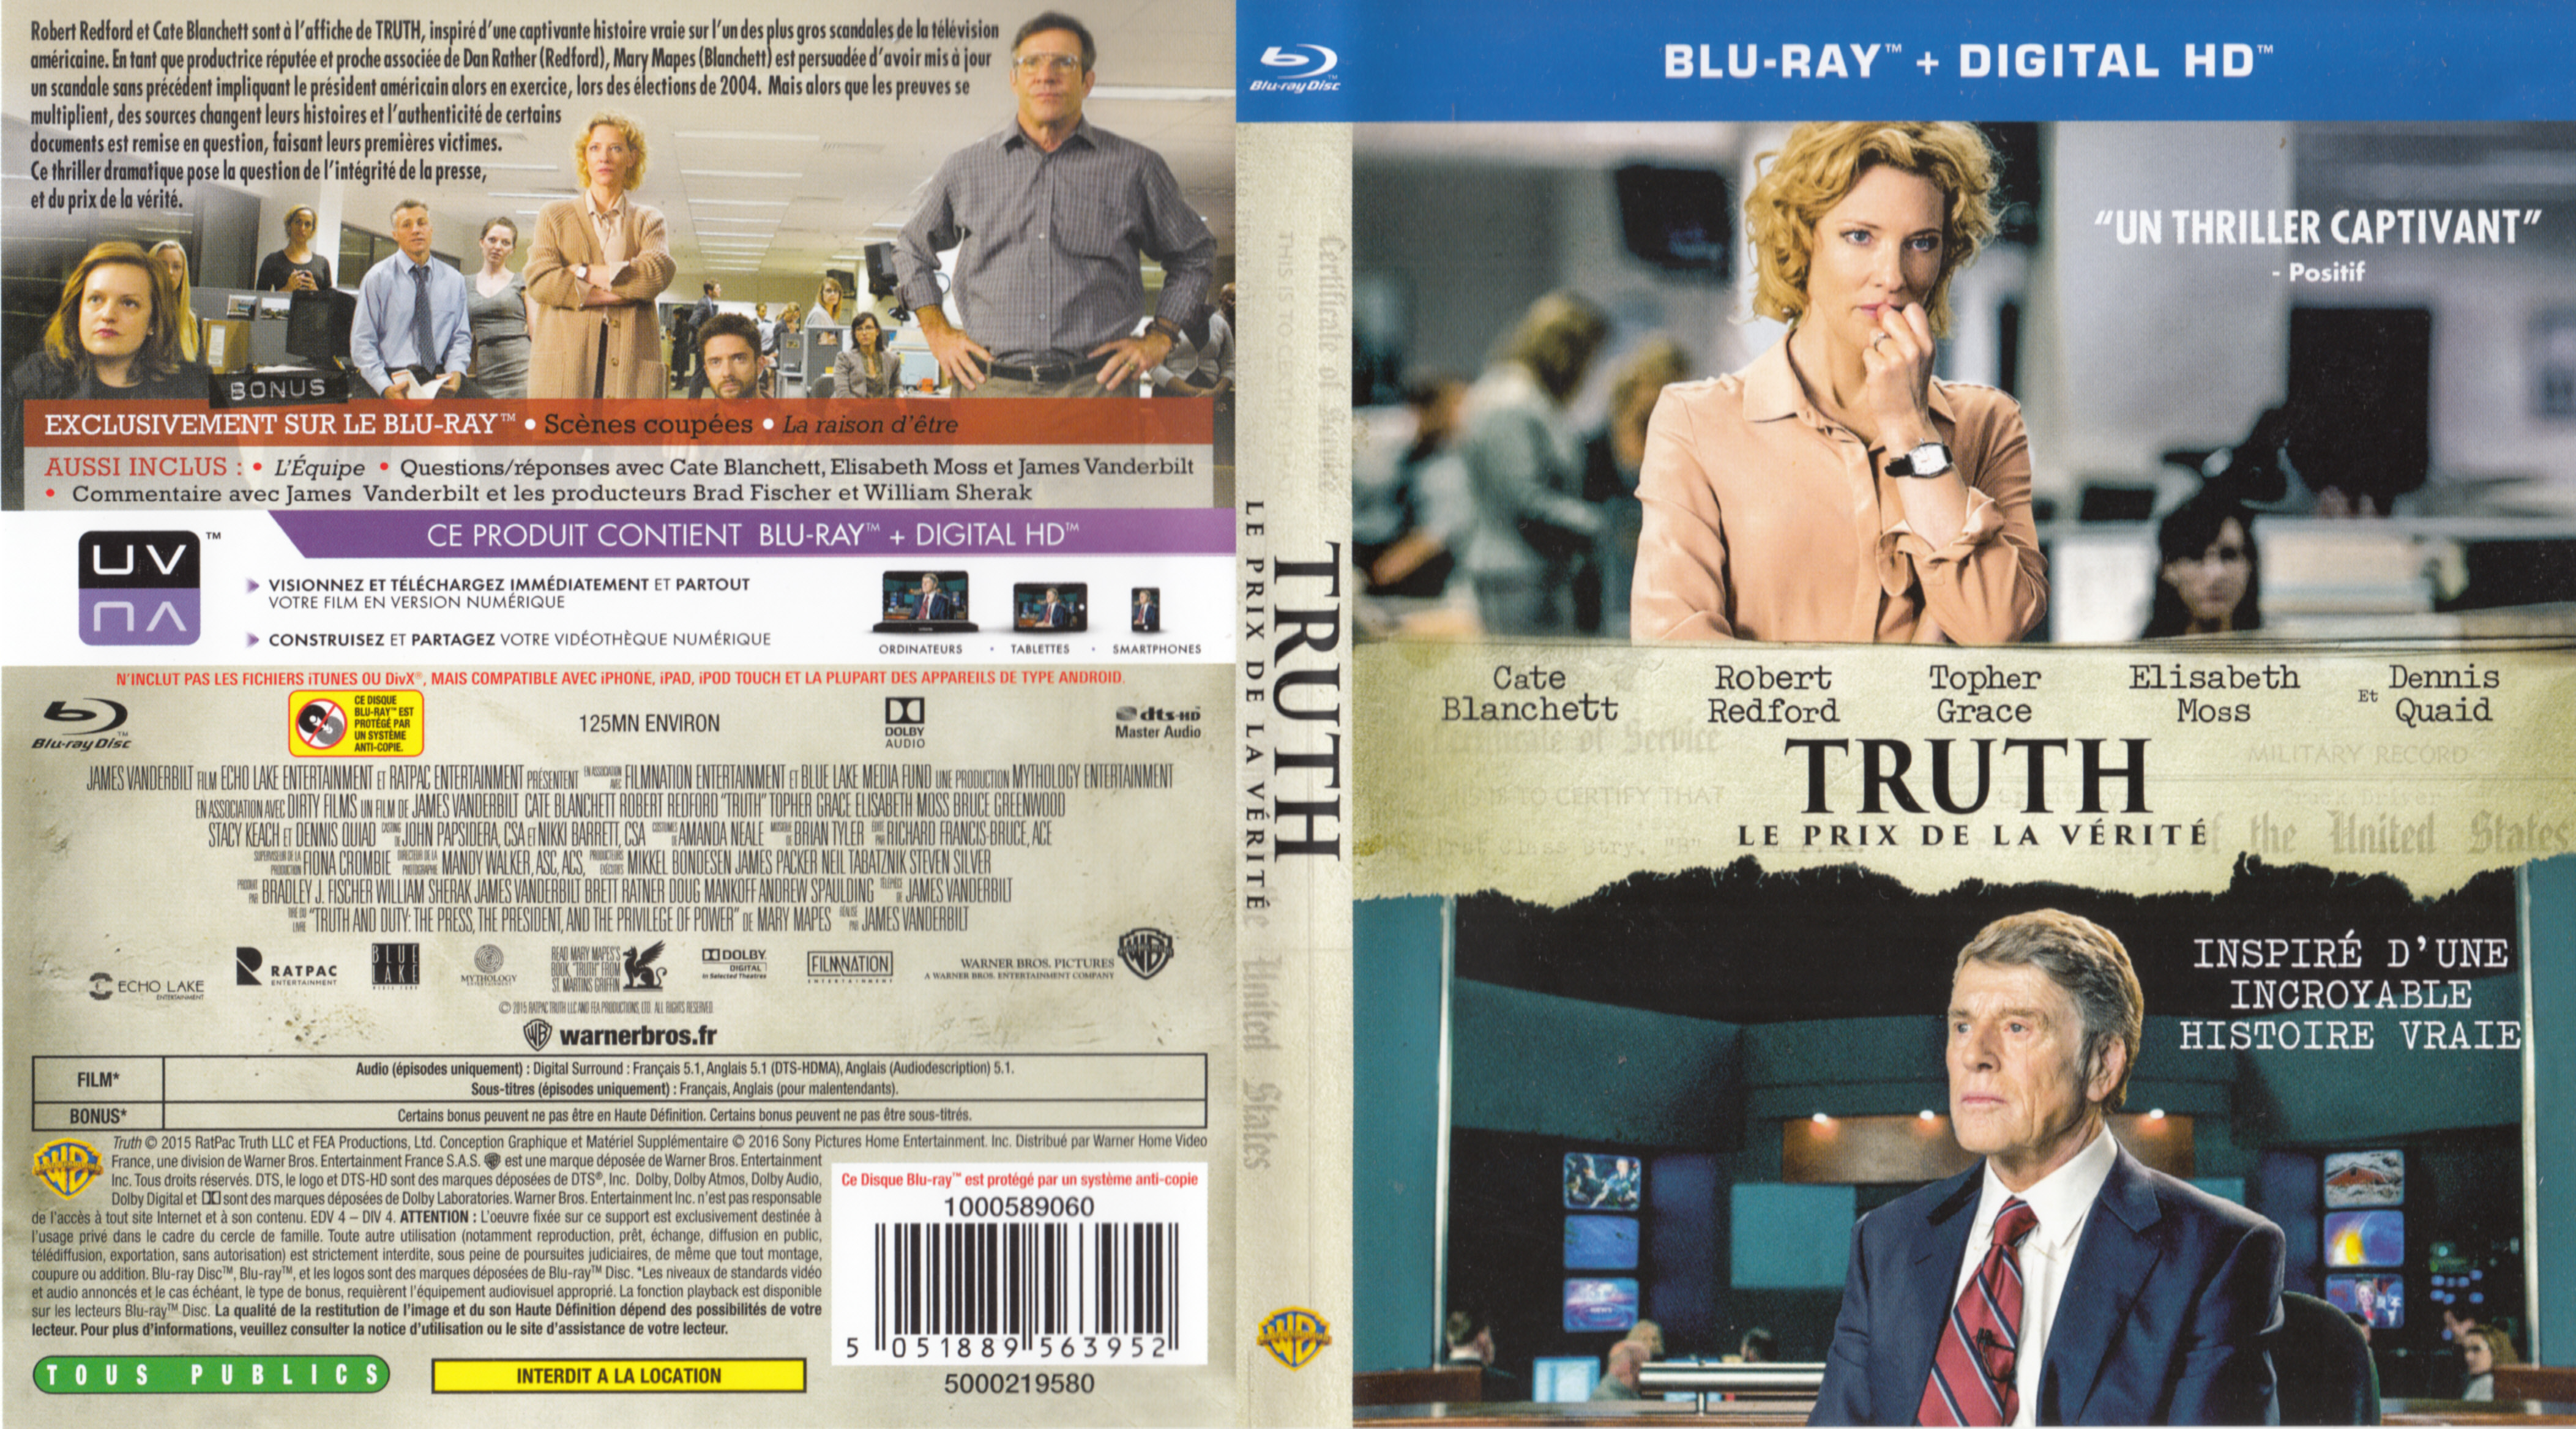 Jaquette DVD Truth Le prix de la vrit (BLU-RAY)